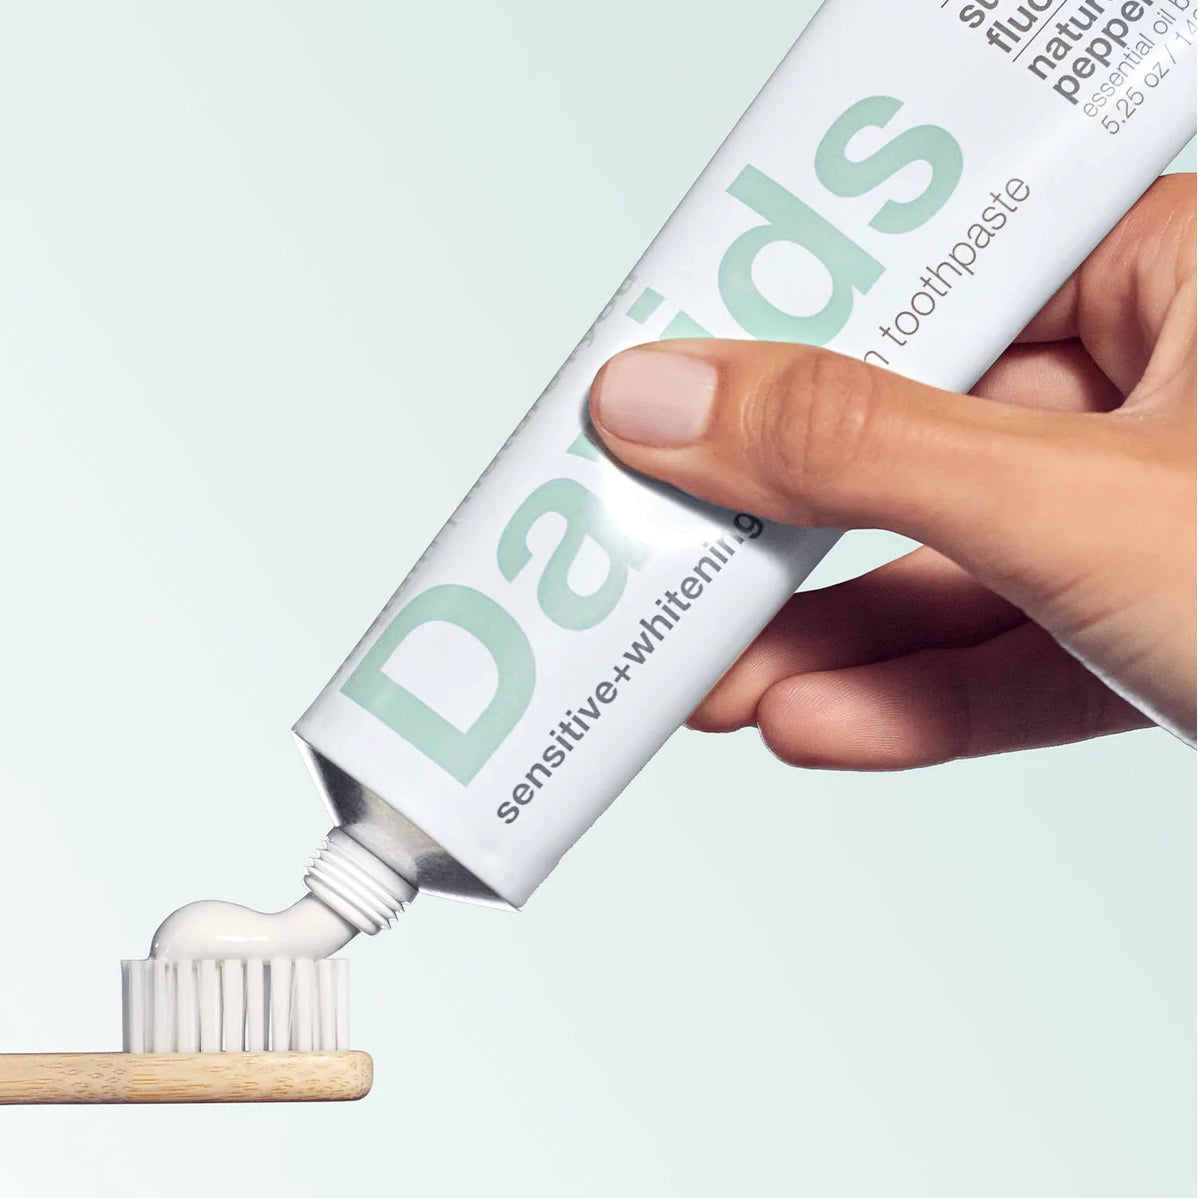 Davids Premium Toothpaste | Sensitive + Whitening Nano-Hydroxyapatite Davids Natural Toothpaste 